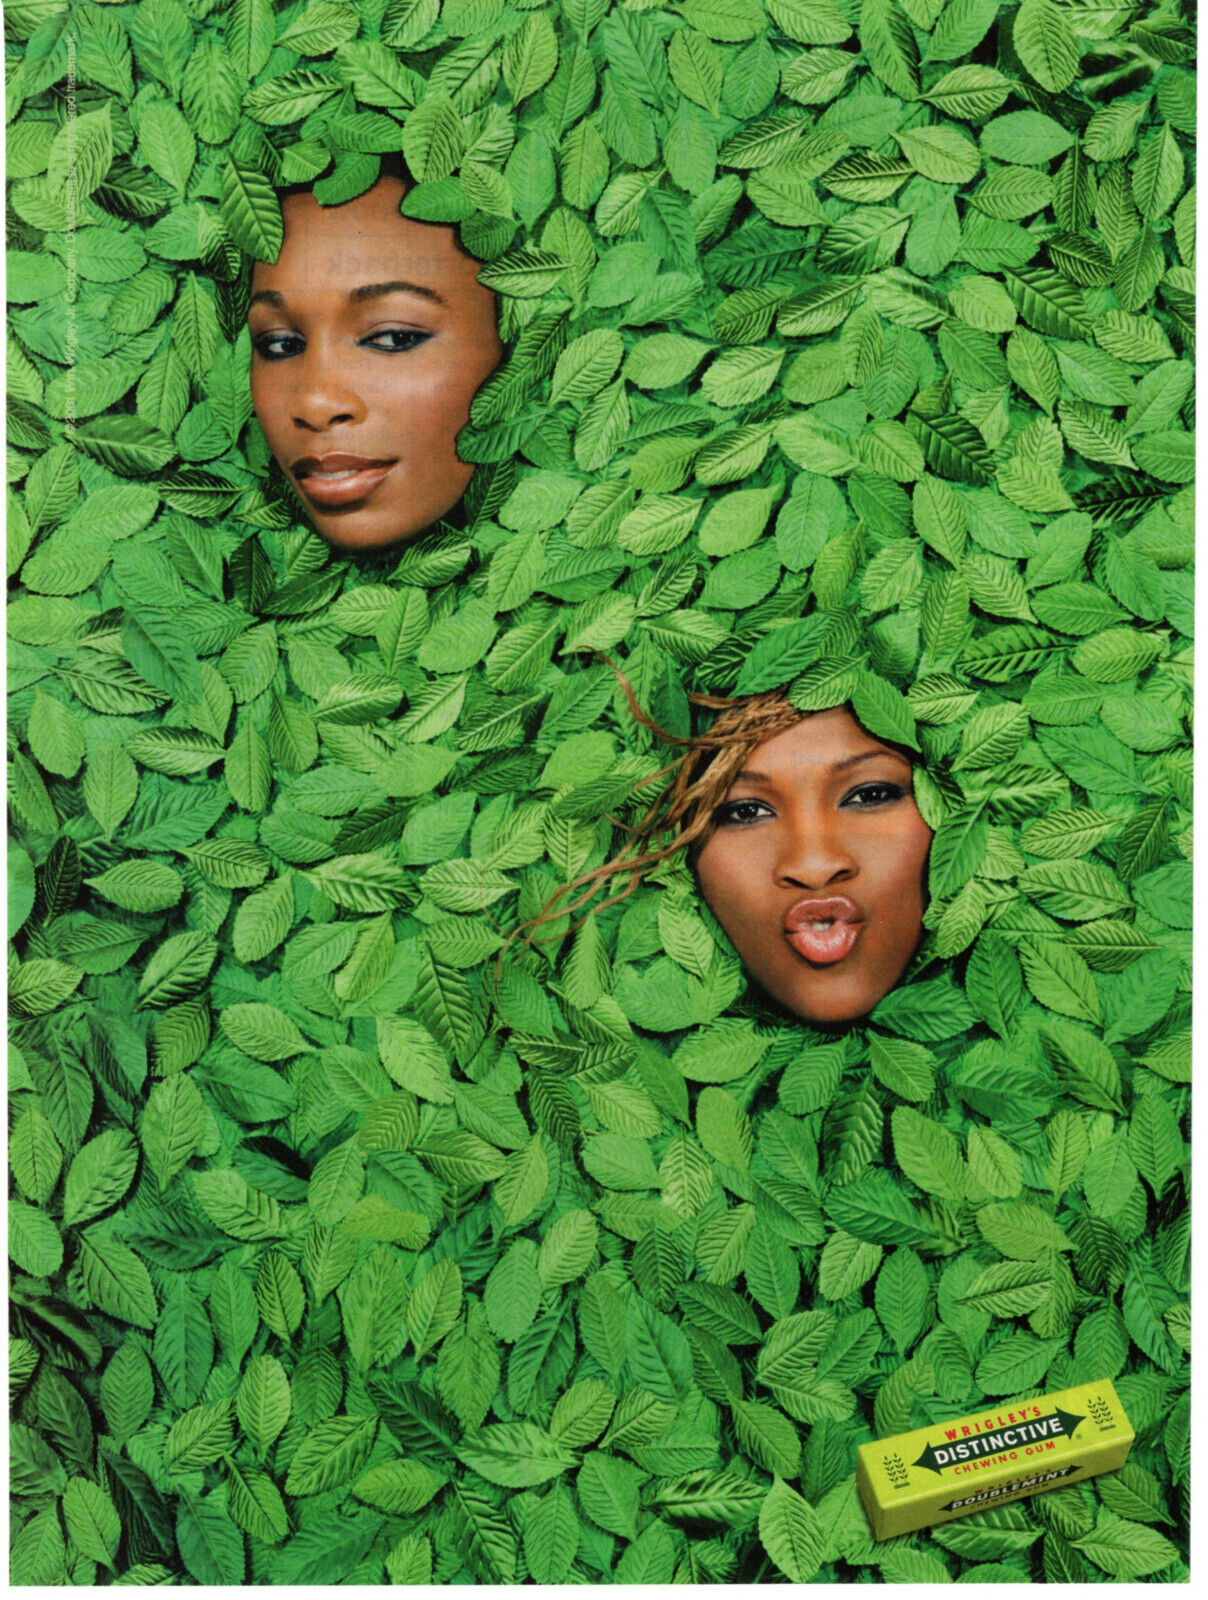 Wrigley's Gum Serena & Venus Williams Tennis 2001 Vintage Print Ad Original